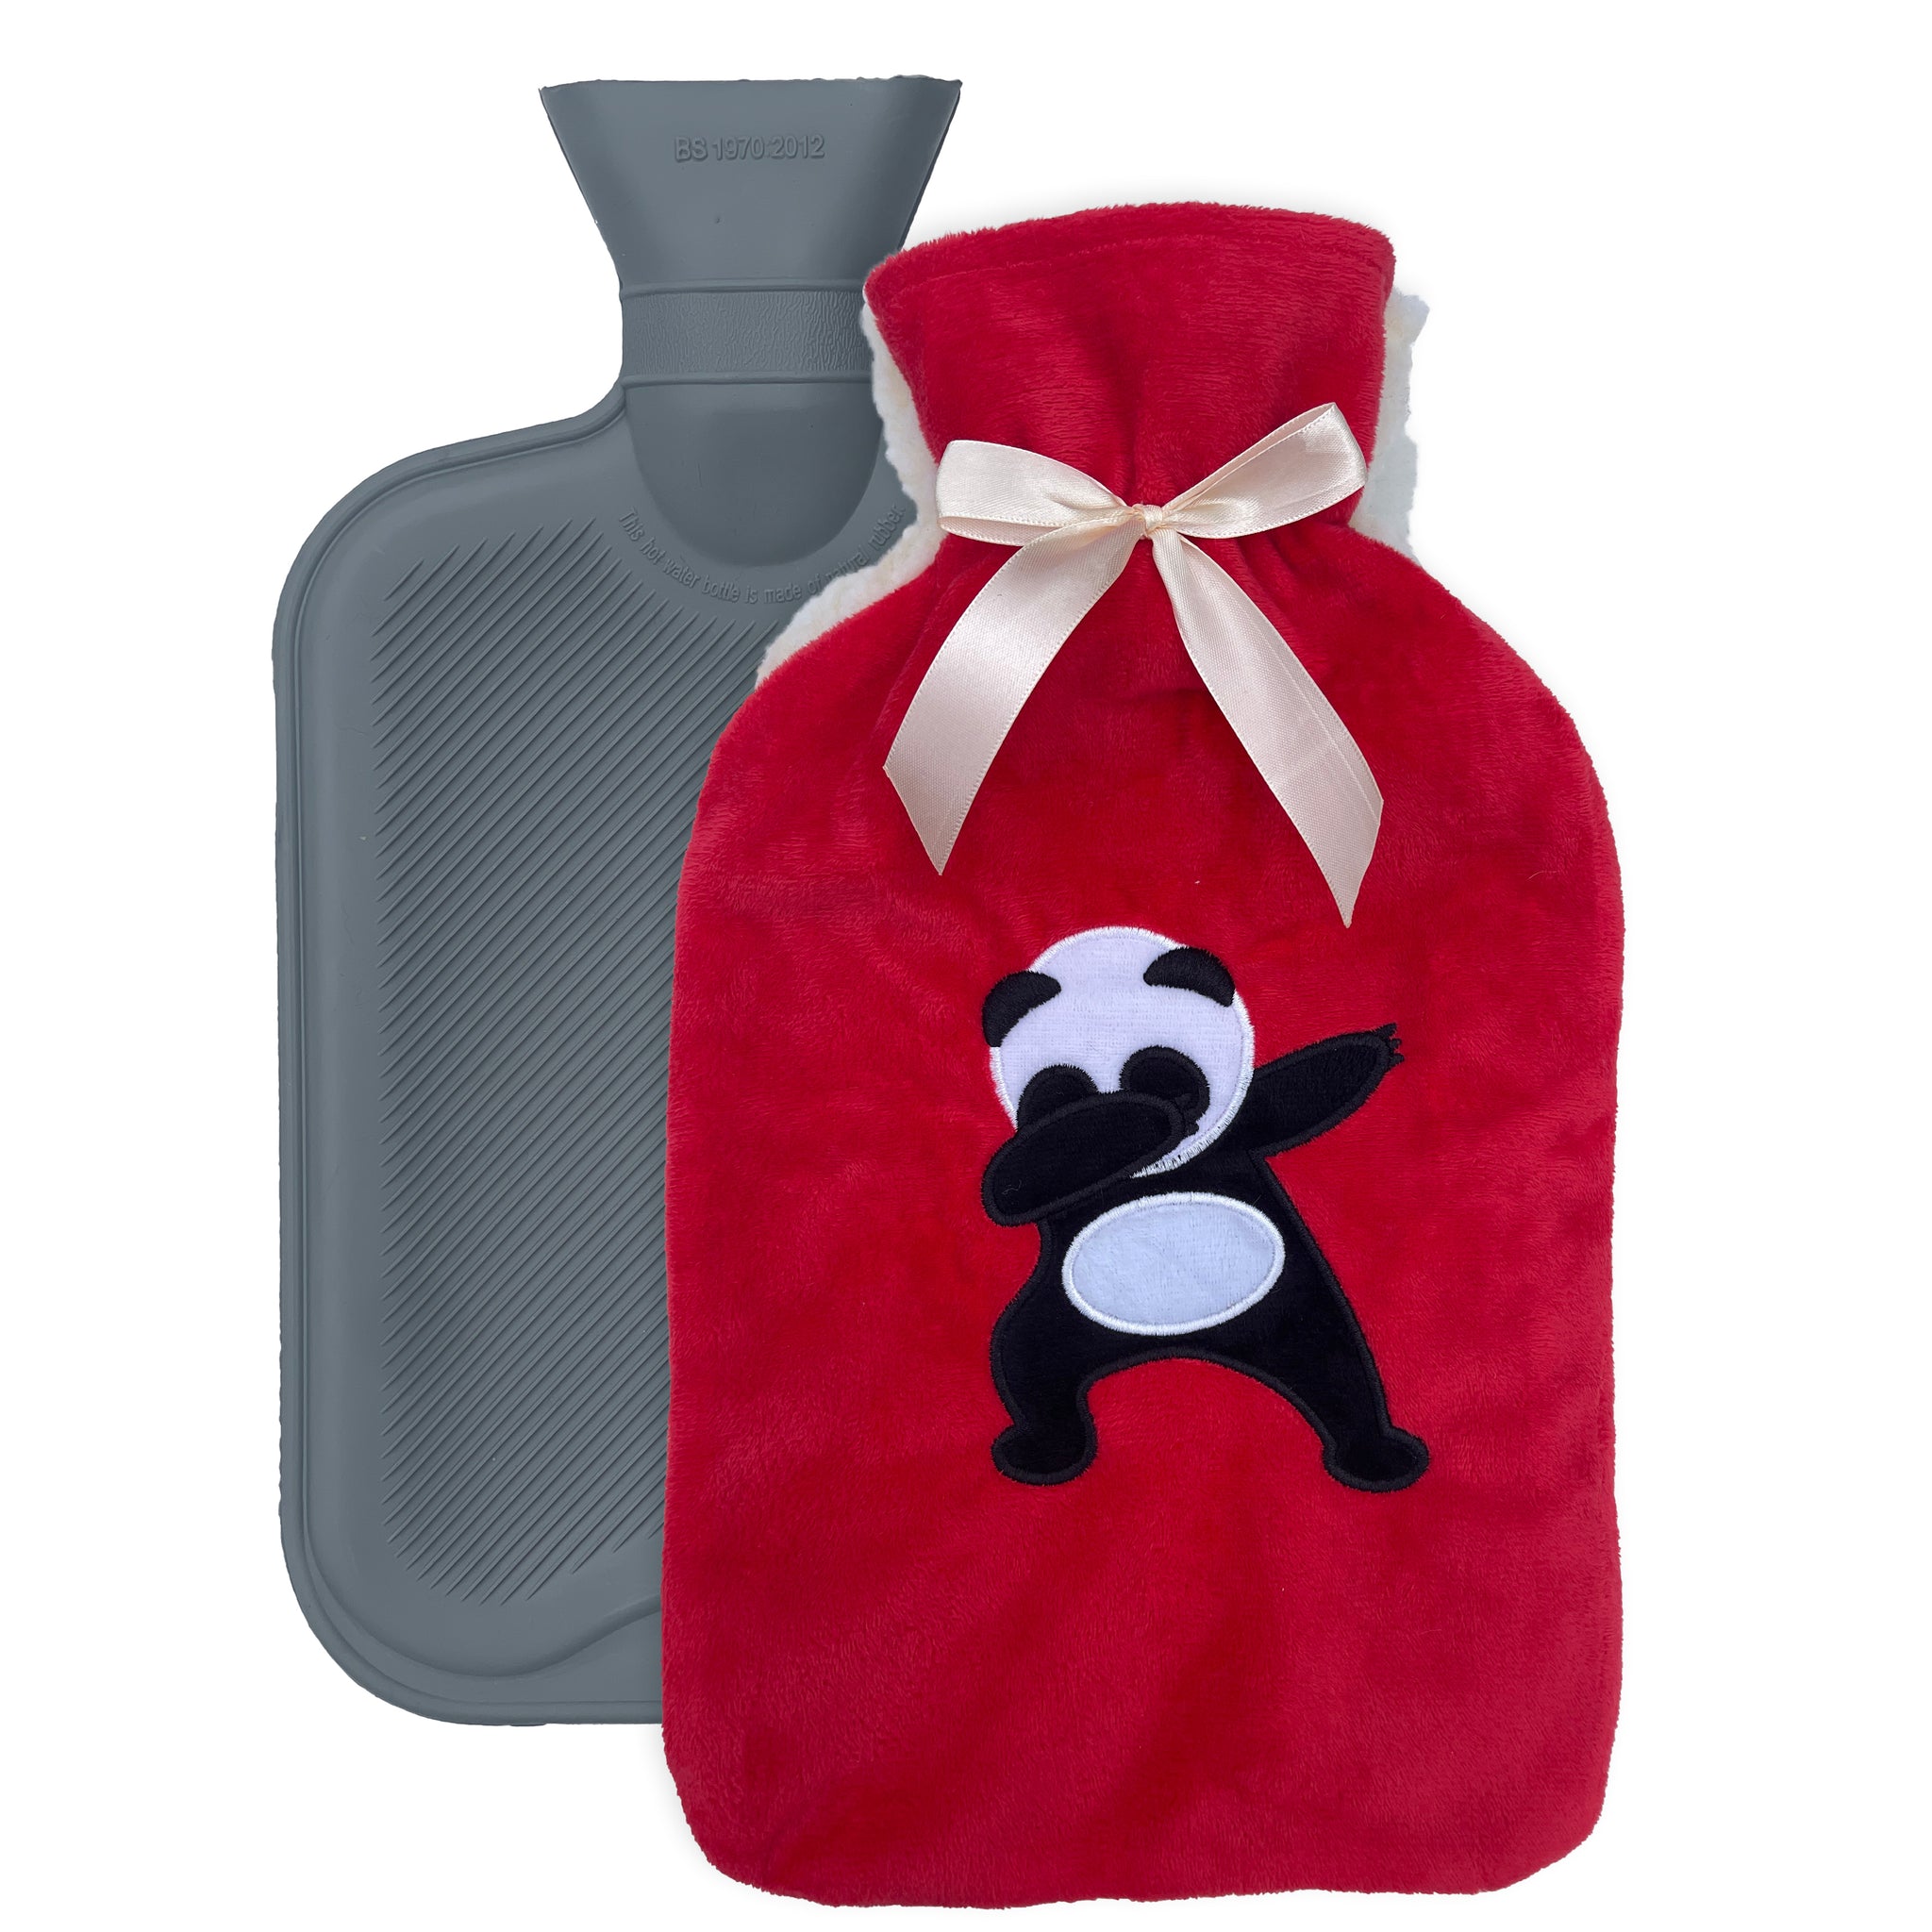 Hot Water Bottle with Sherpa Fleece Cover - 2 Litre - Panda